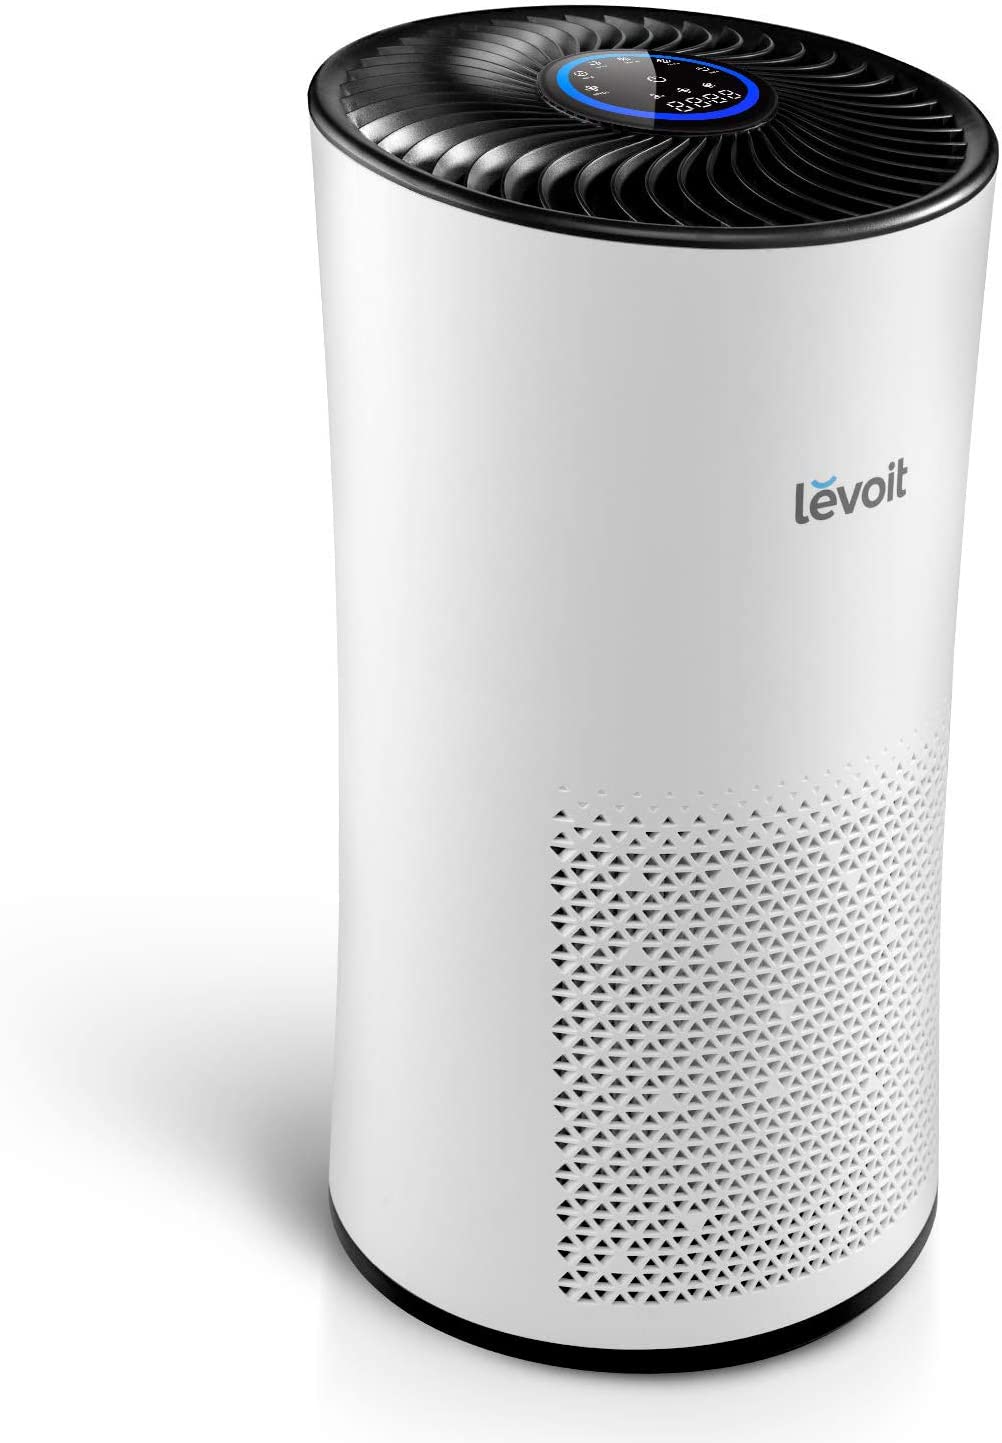 دستگاه تصفیه هوا LEVOIT Air Purifiers for Home CADR - ارسال 10 الی 15 روز کاری